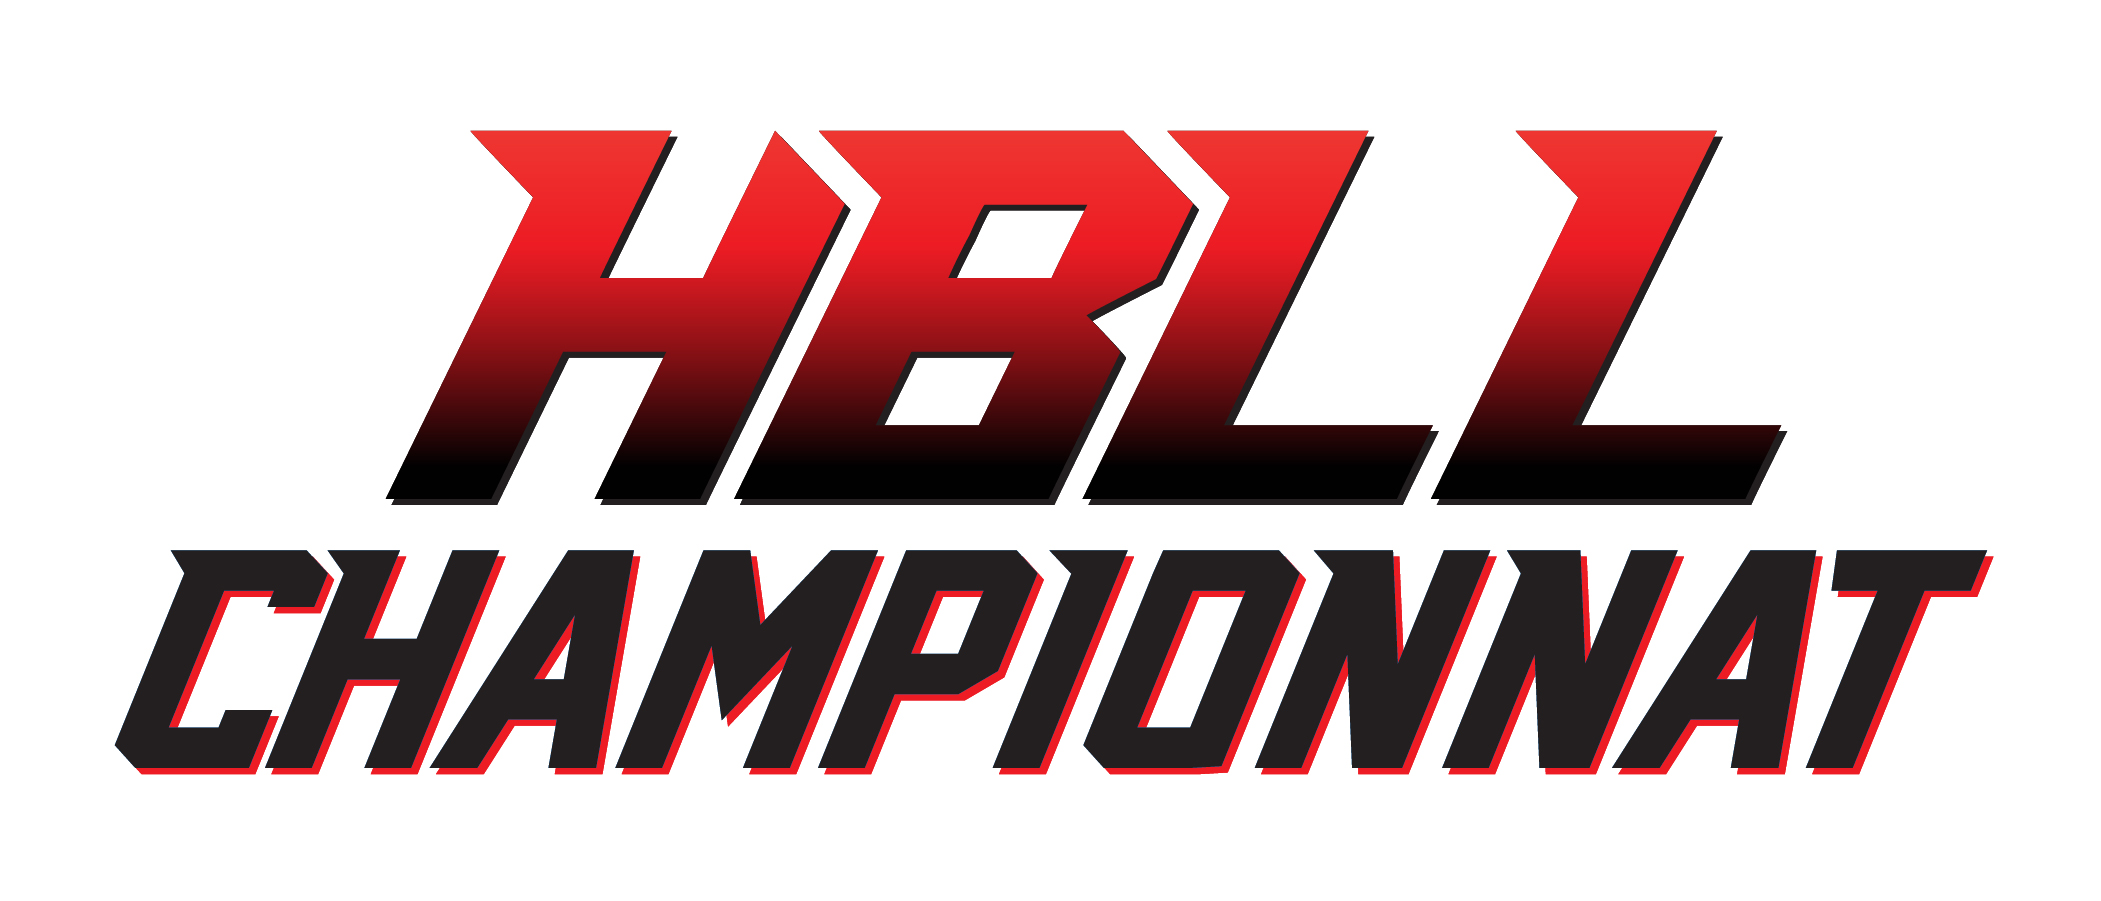 logo-championnat (002)